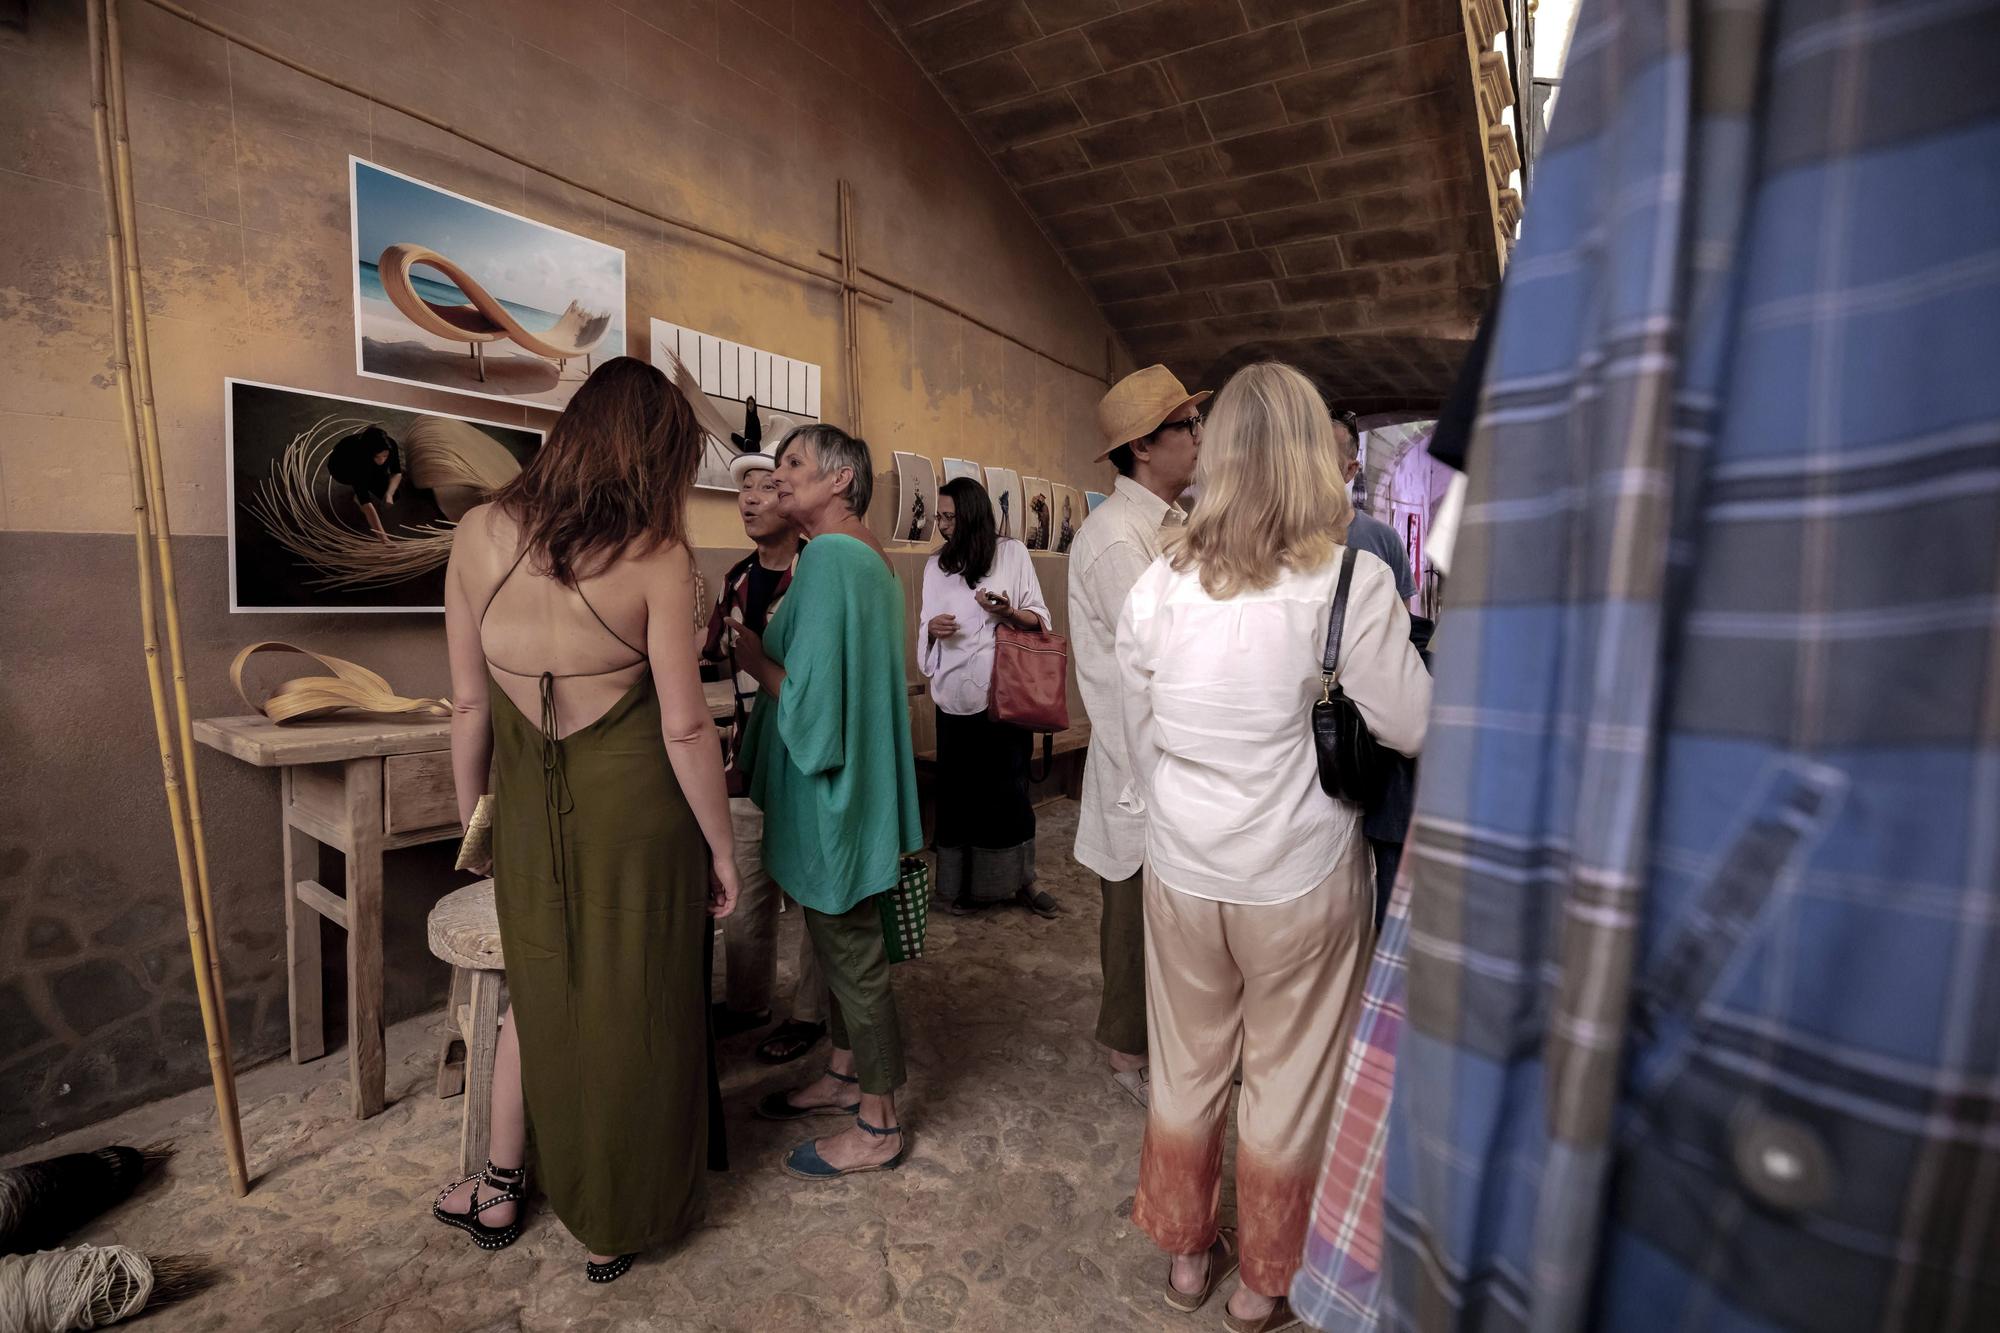 Das Festival XTant feiert die Textilkunst der Welt in Palma de Mallorca